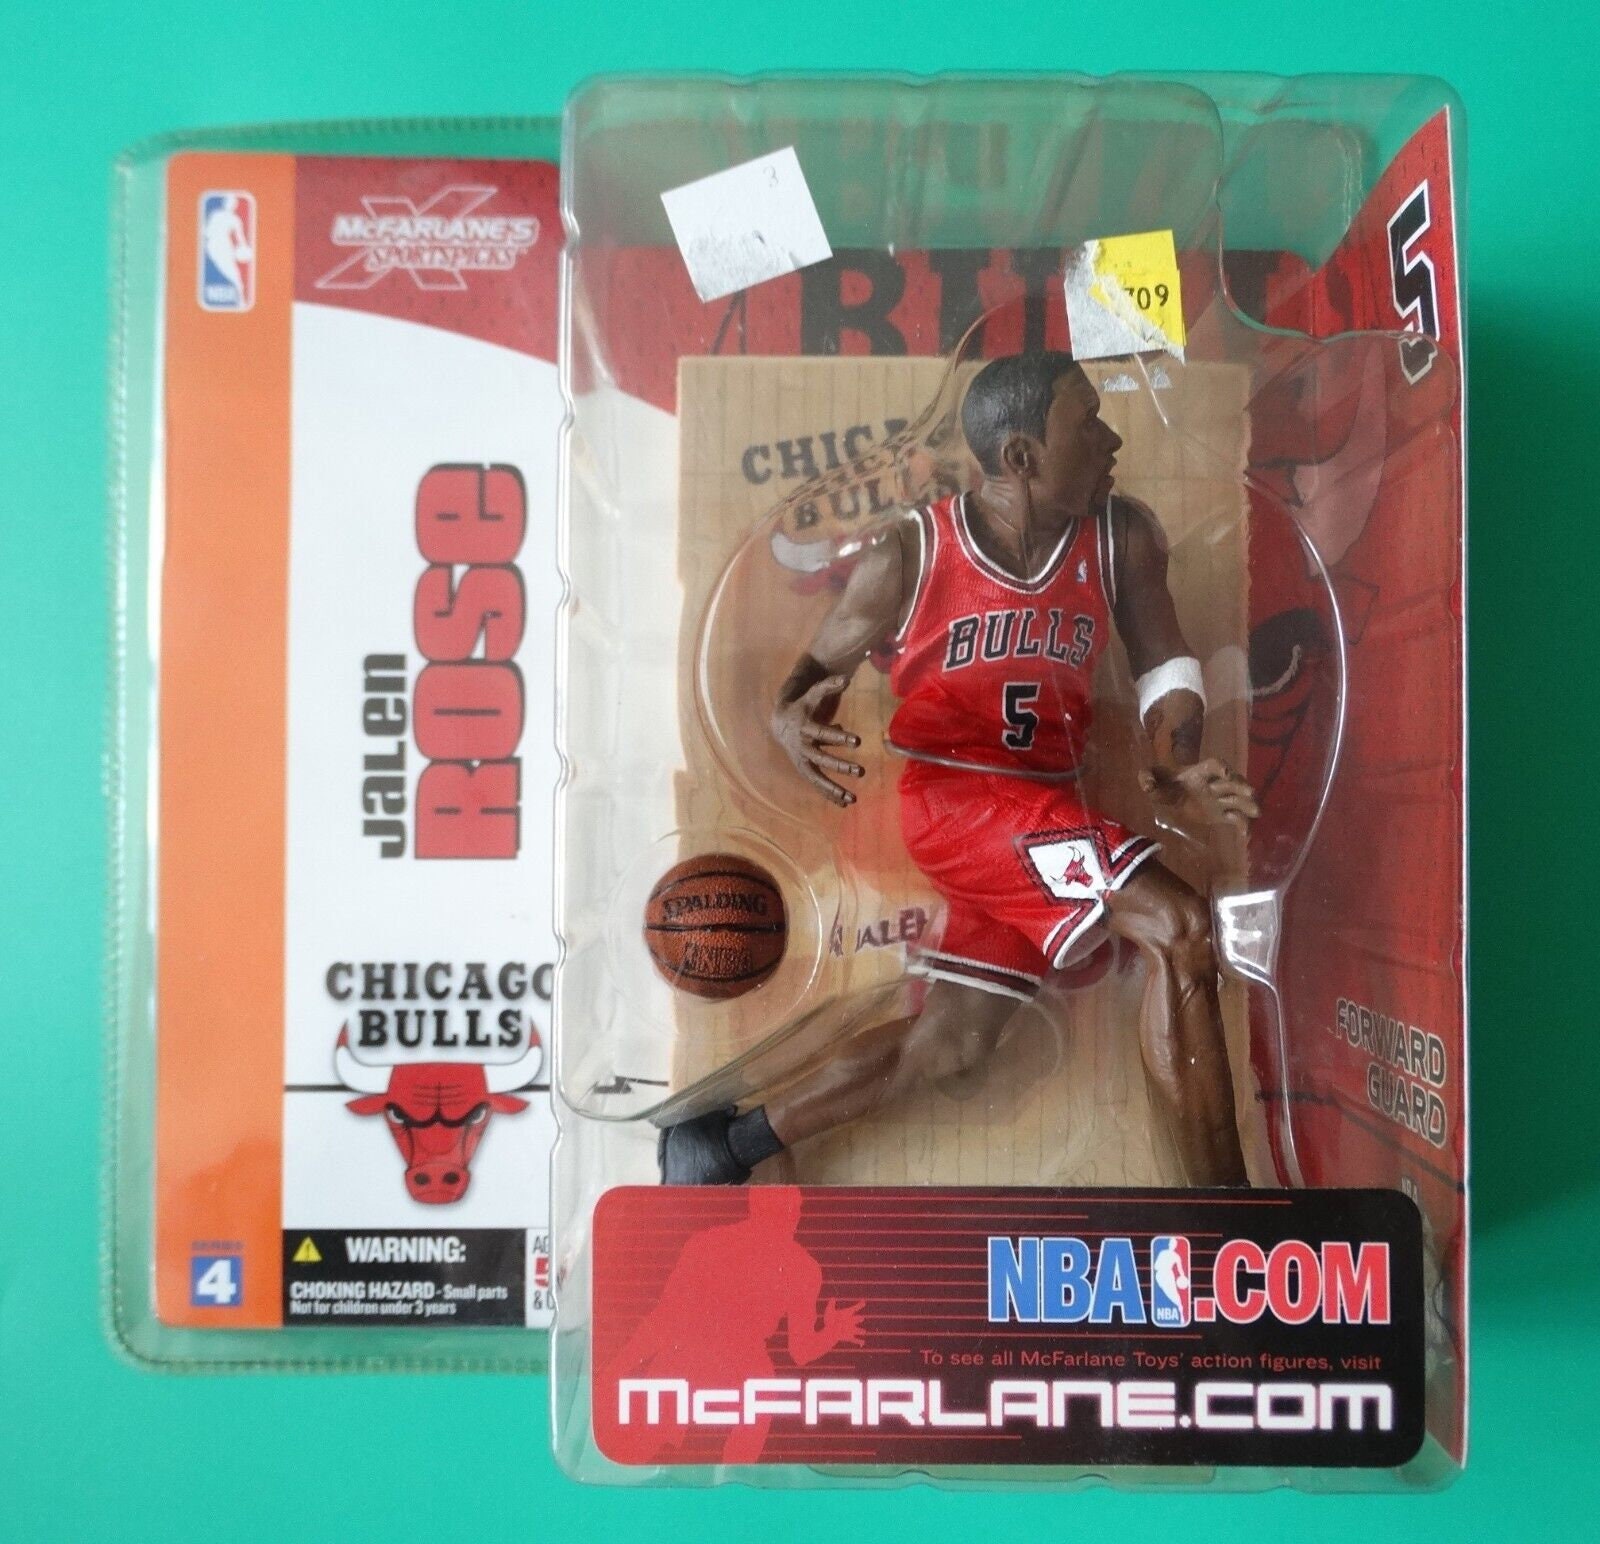 Funko Pop! Basketball Bulls Michael Jordan Red Jersery NBA Sticker Figure  #54 - US